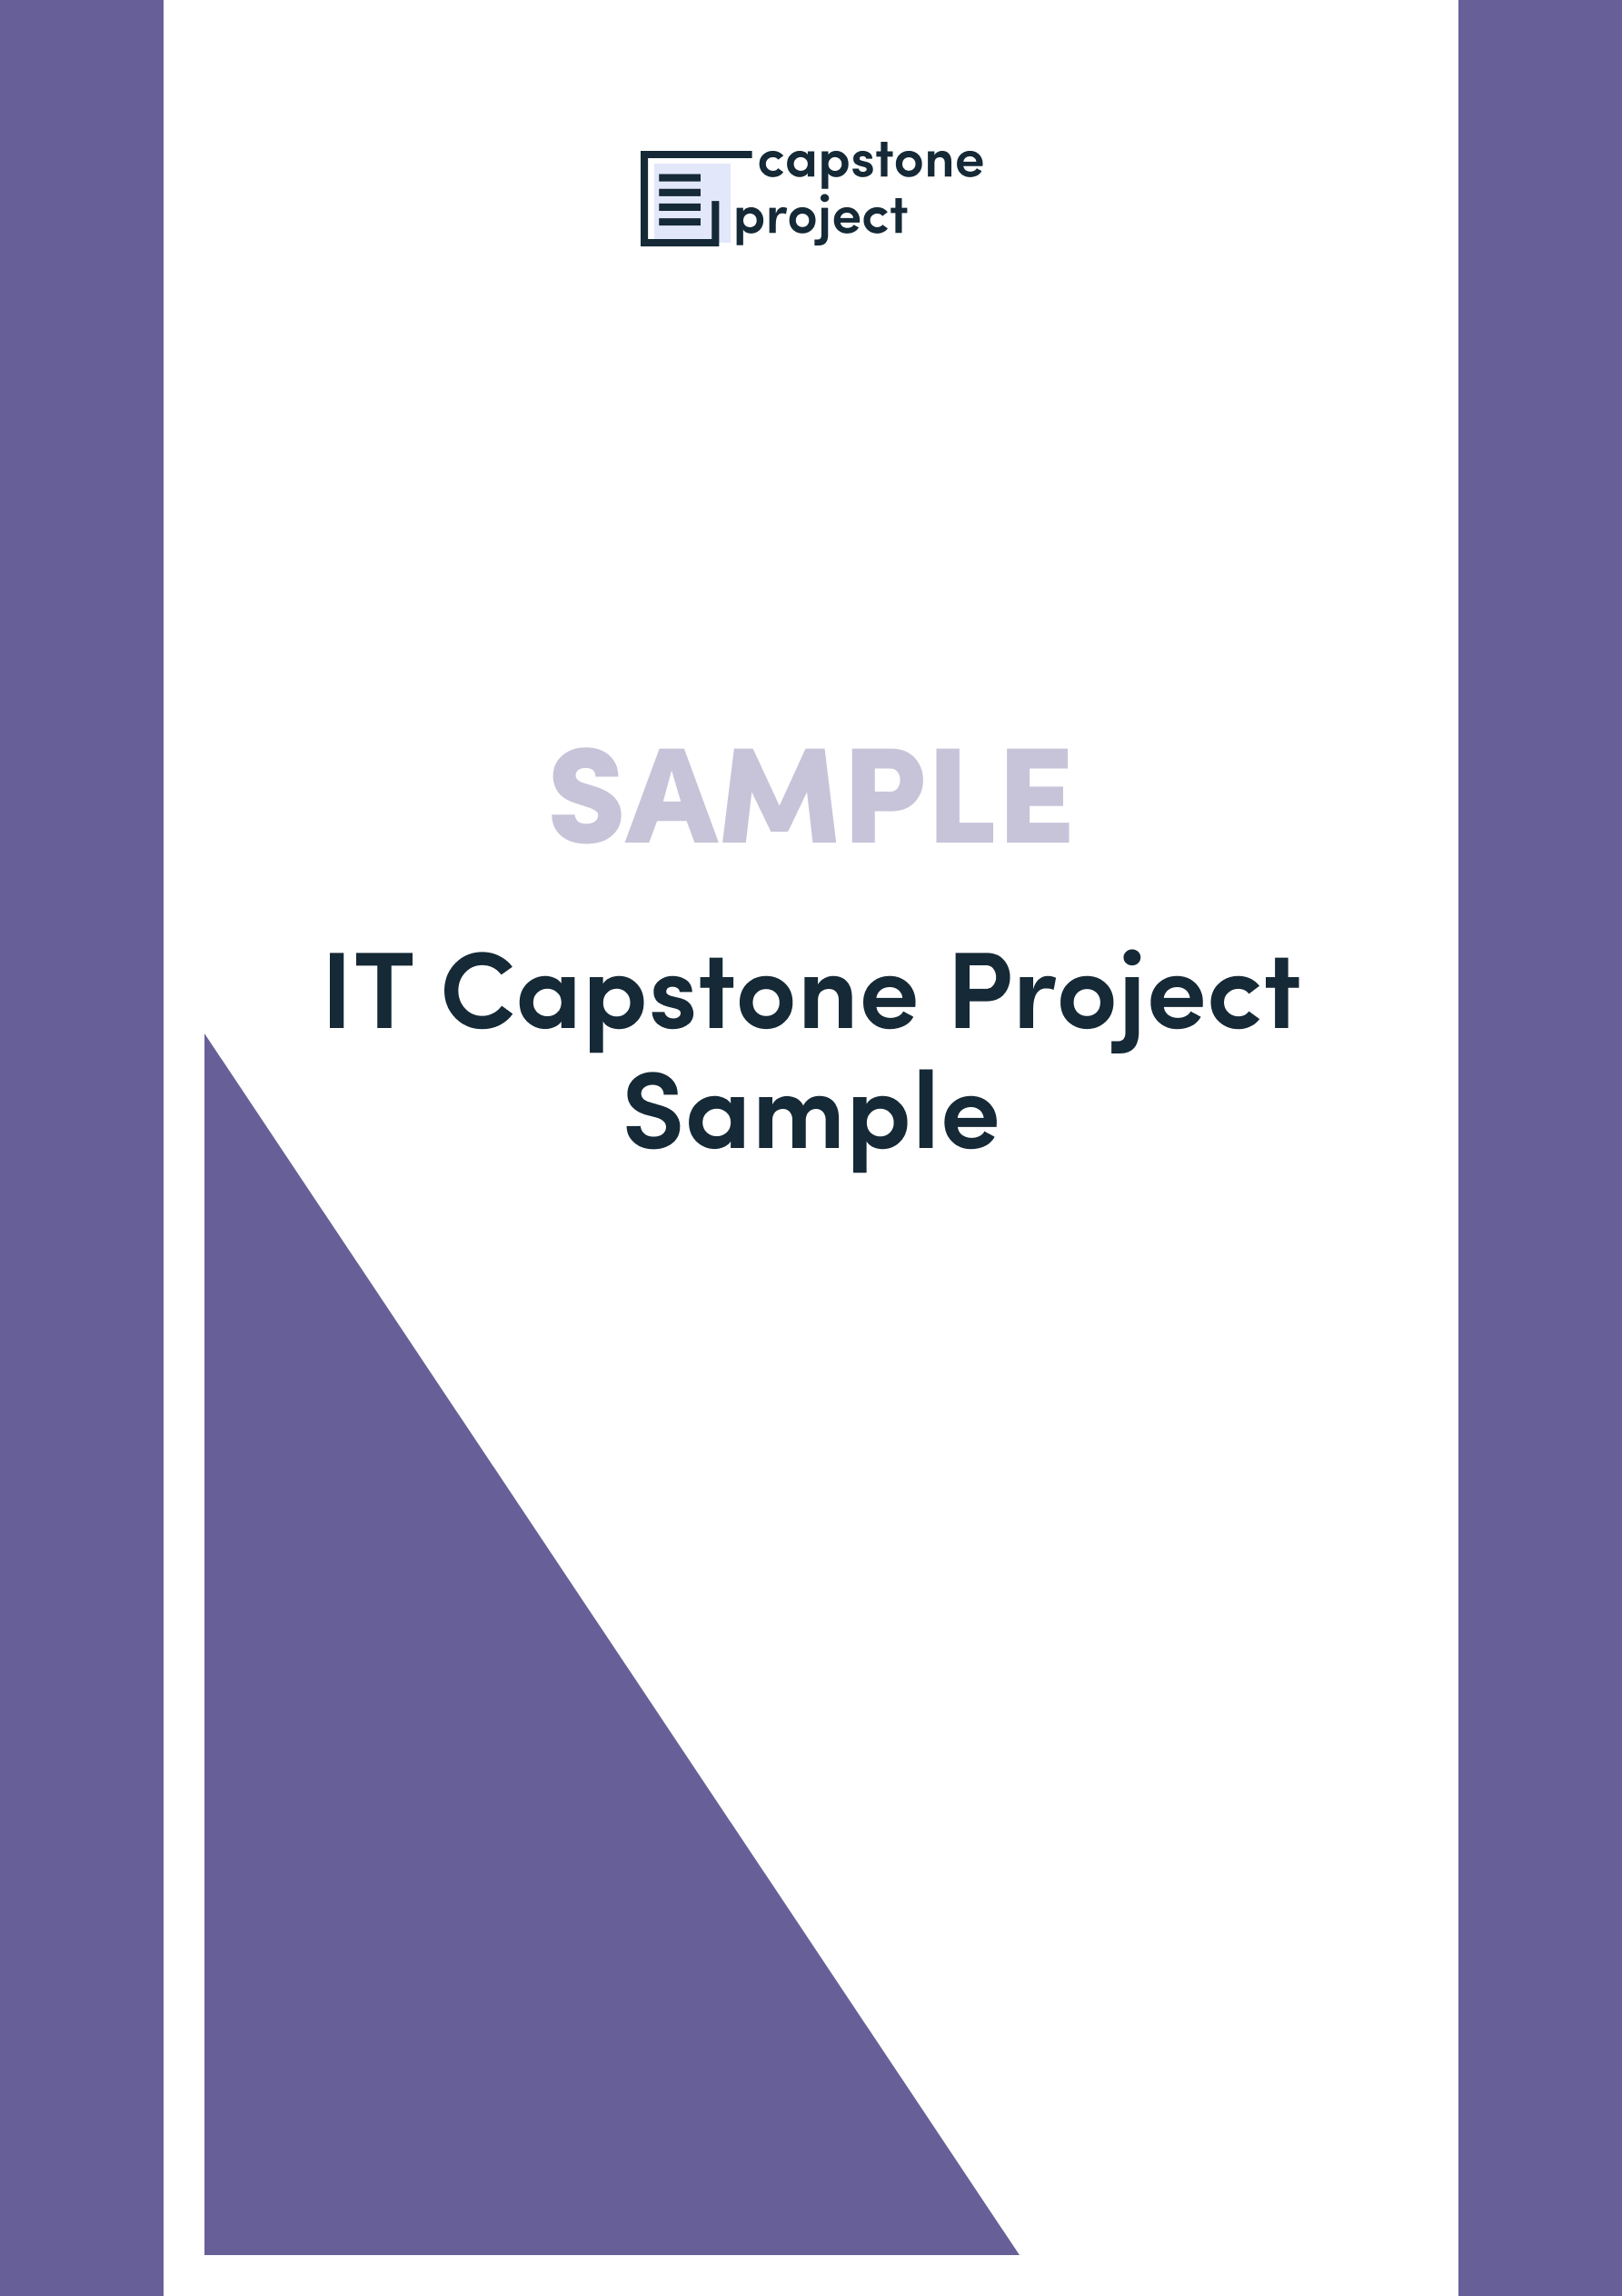 data science capstone project report